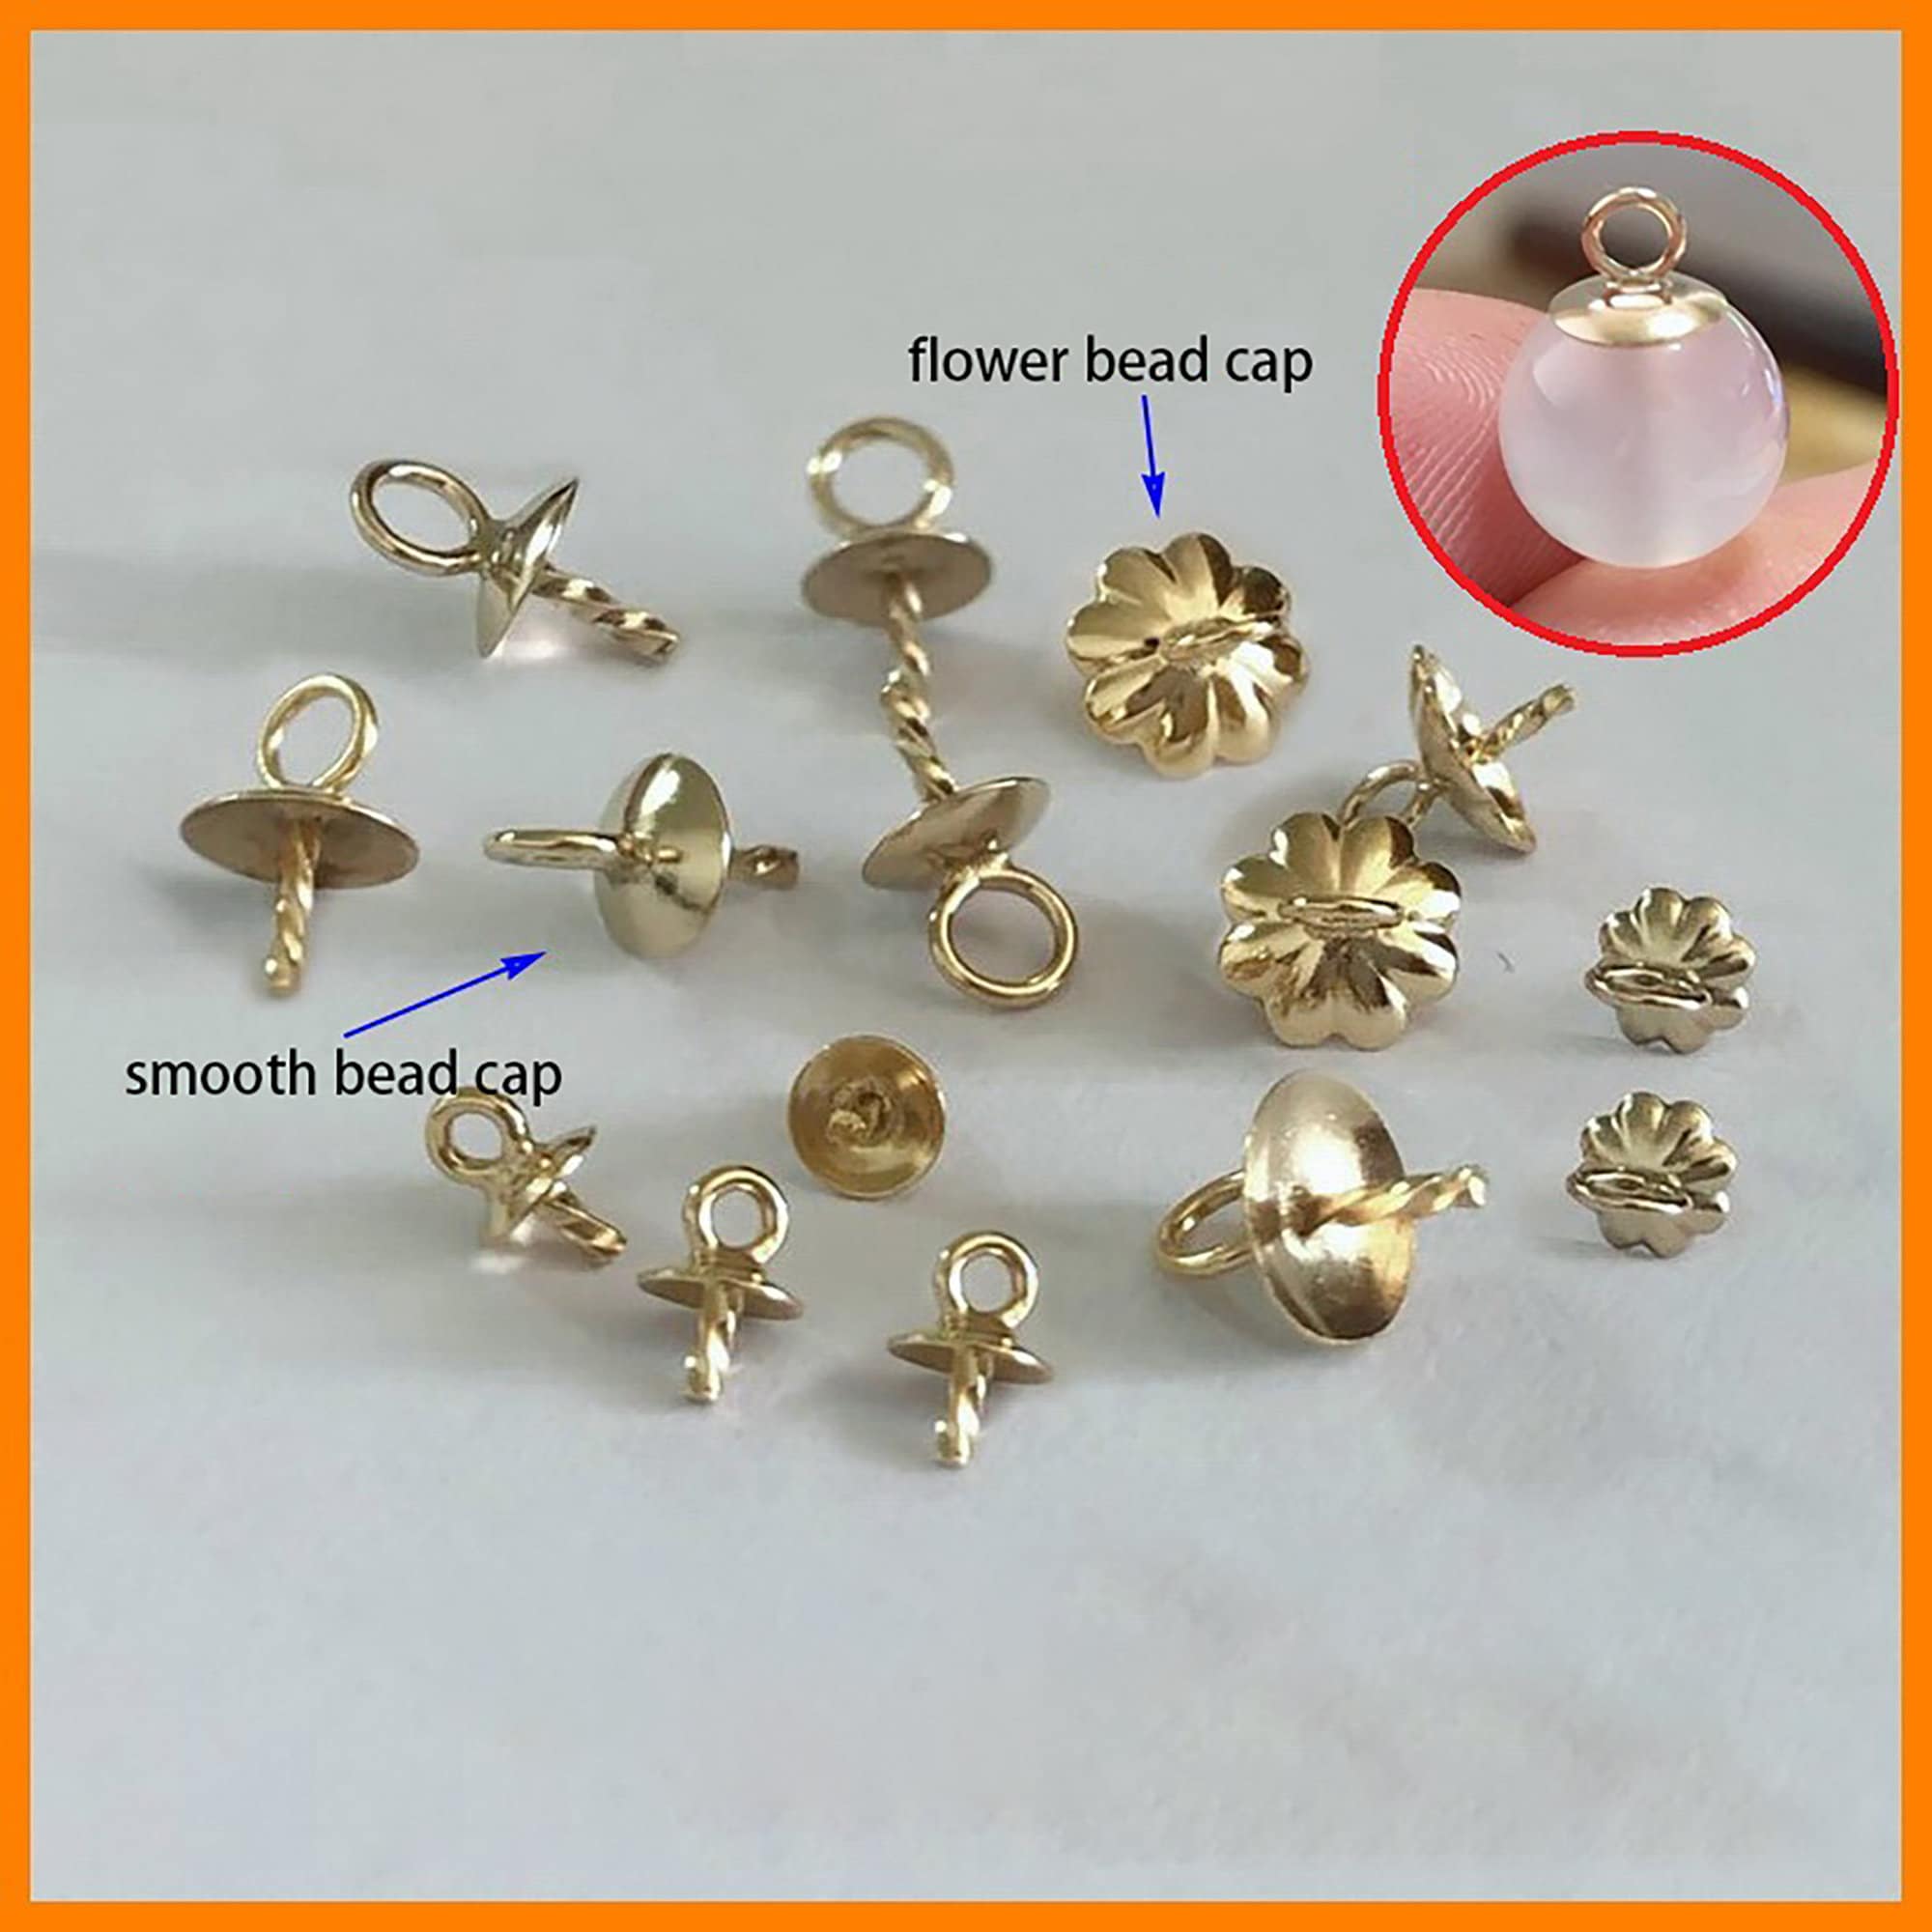 18karat gold pinch bail pendant clasp connector,bead caps with peg